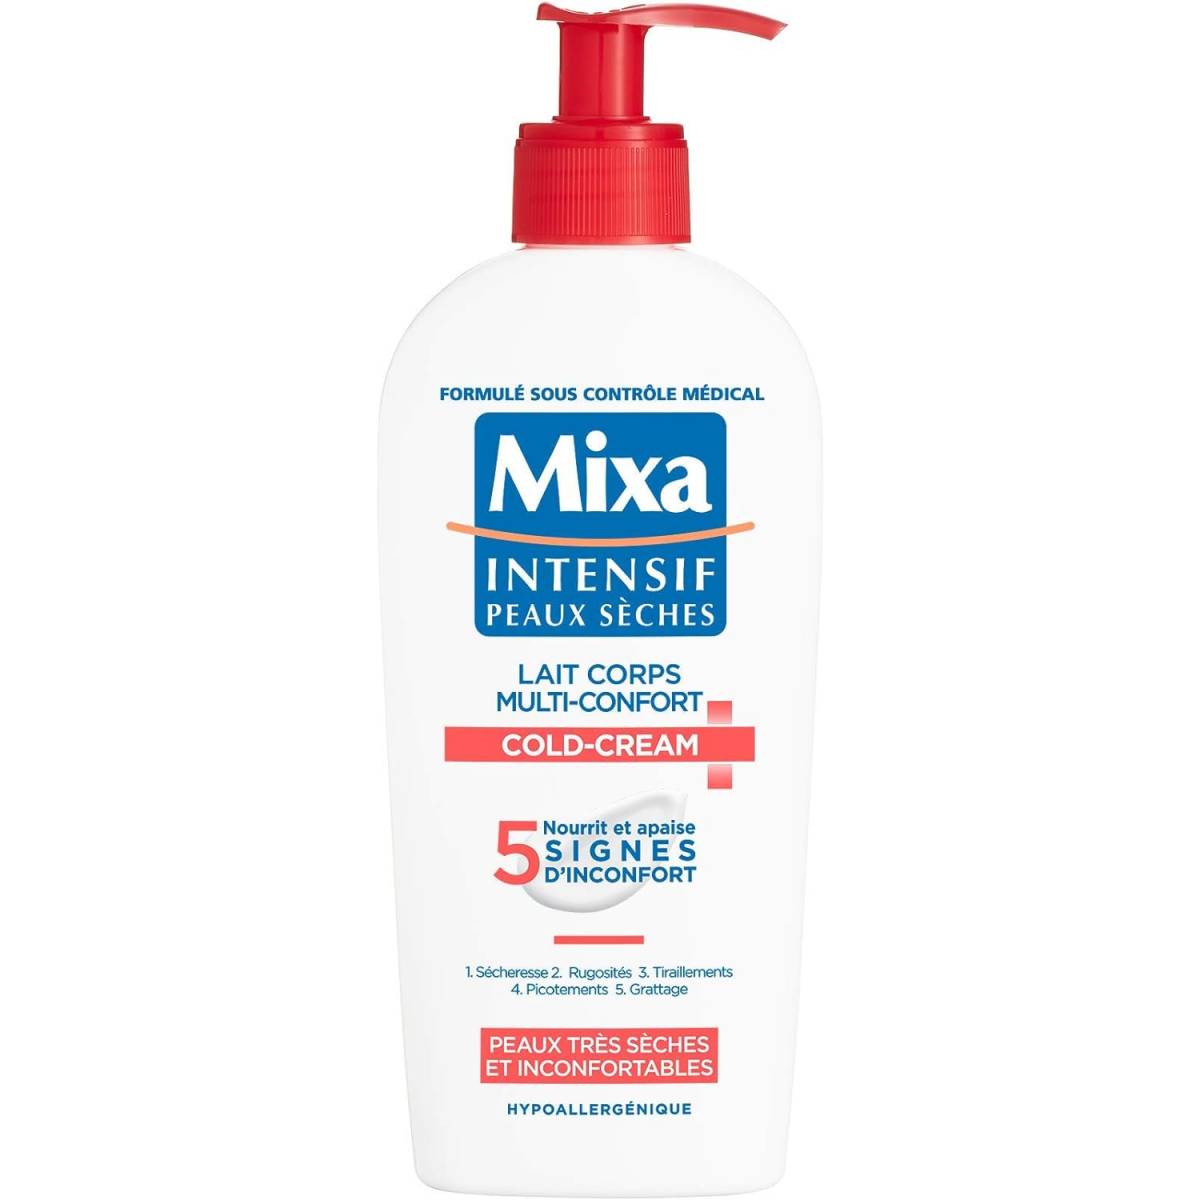 https://www.maxxidiscount.com/41654-large_default/mixa-intensive-dry-skin-multi-comfort-body-lotion-cold-cream-250ml.jpg